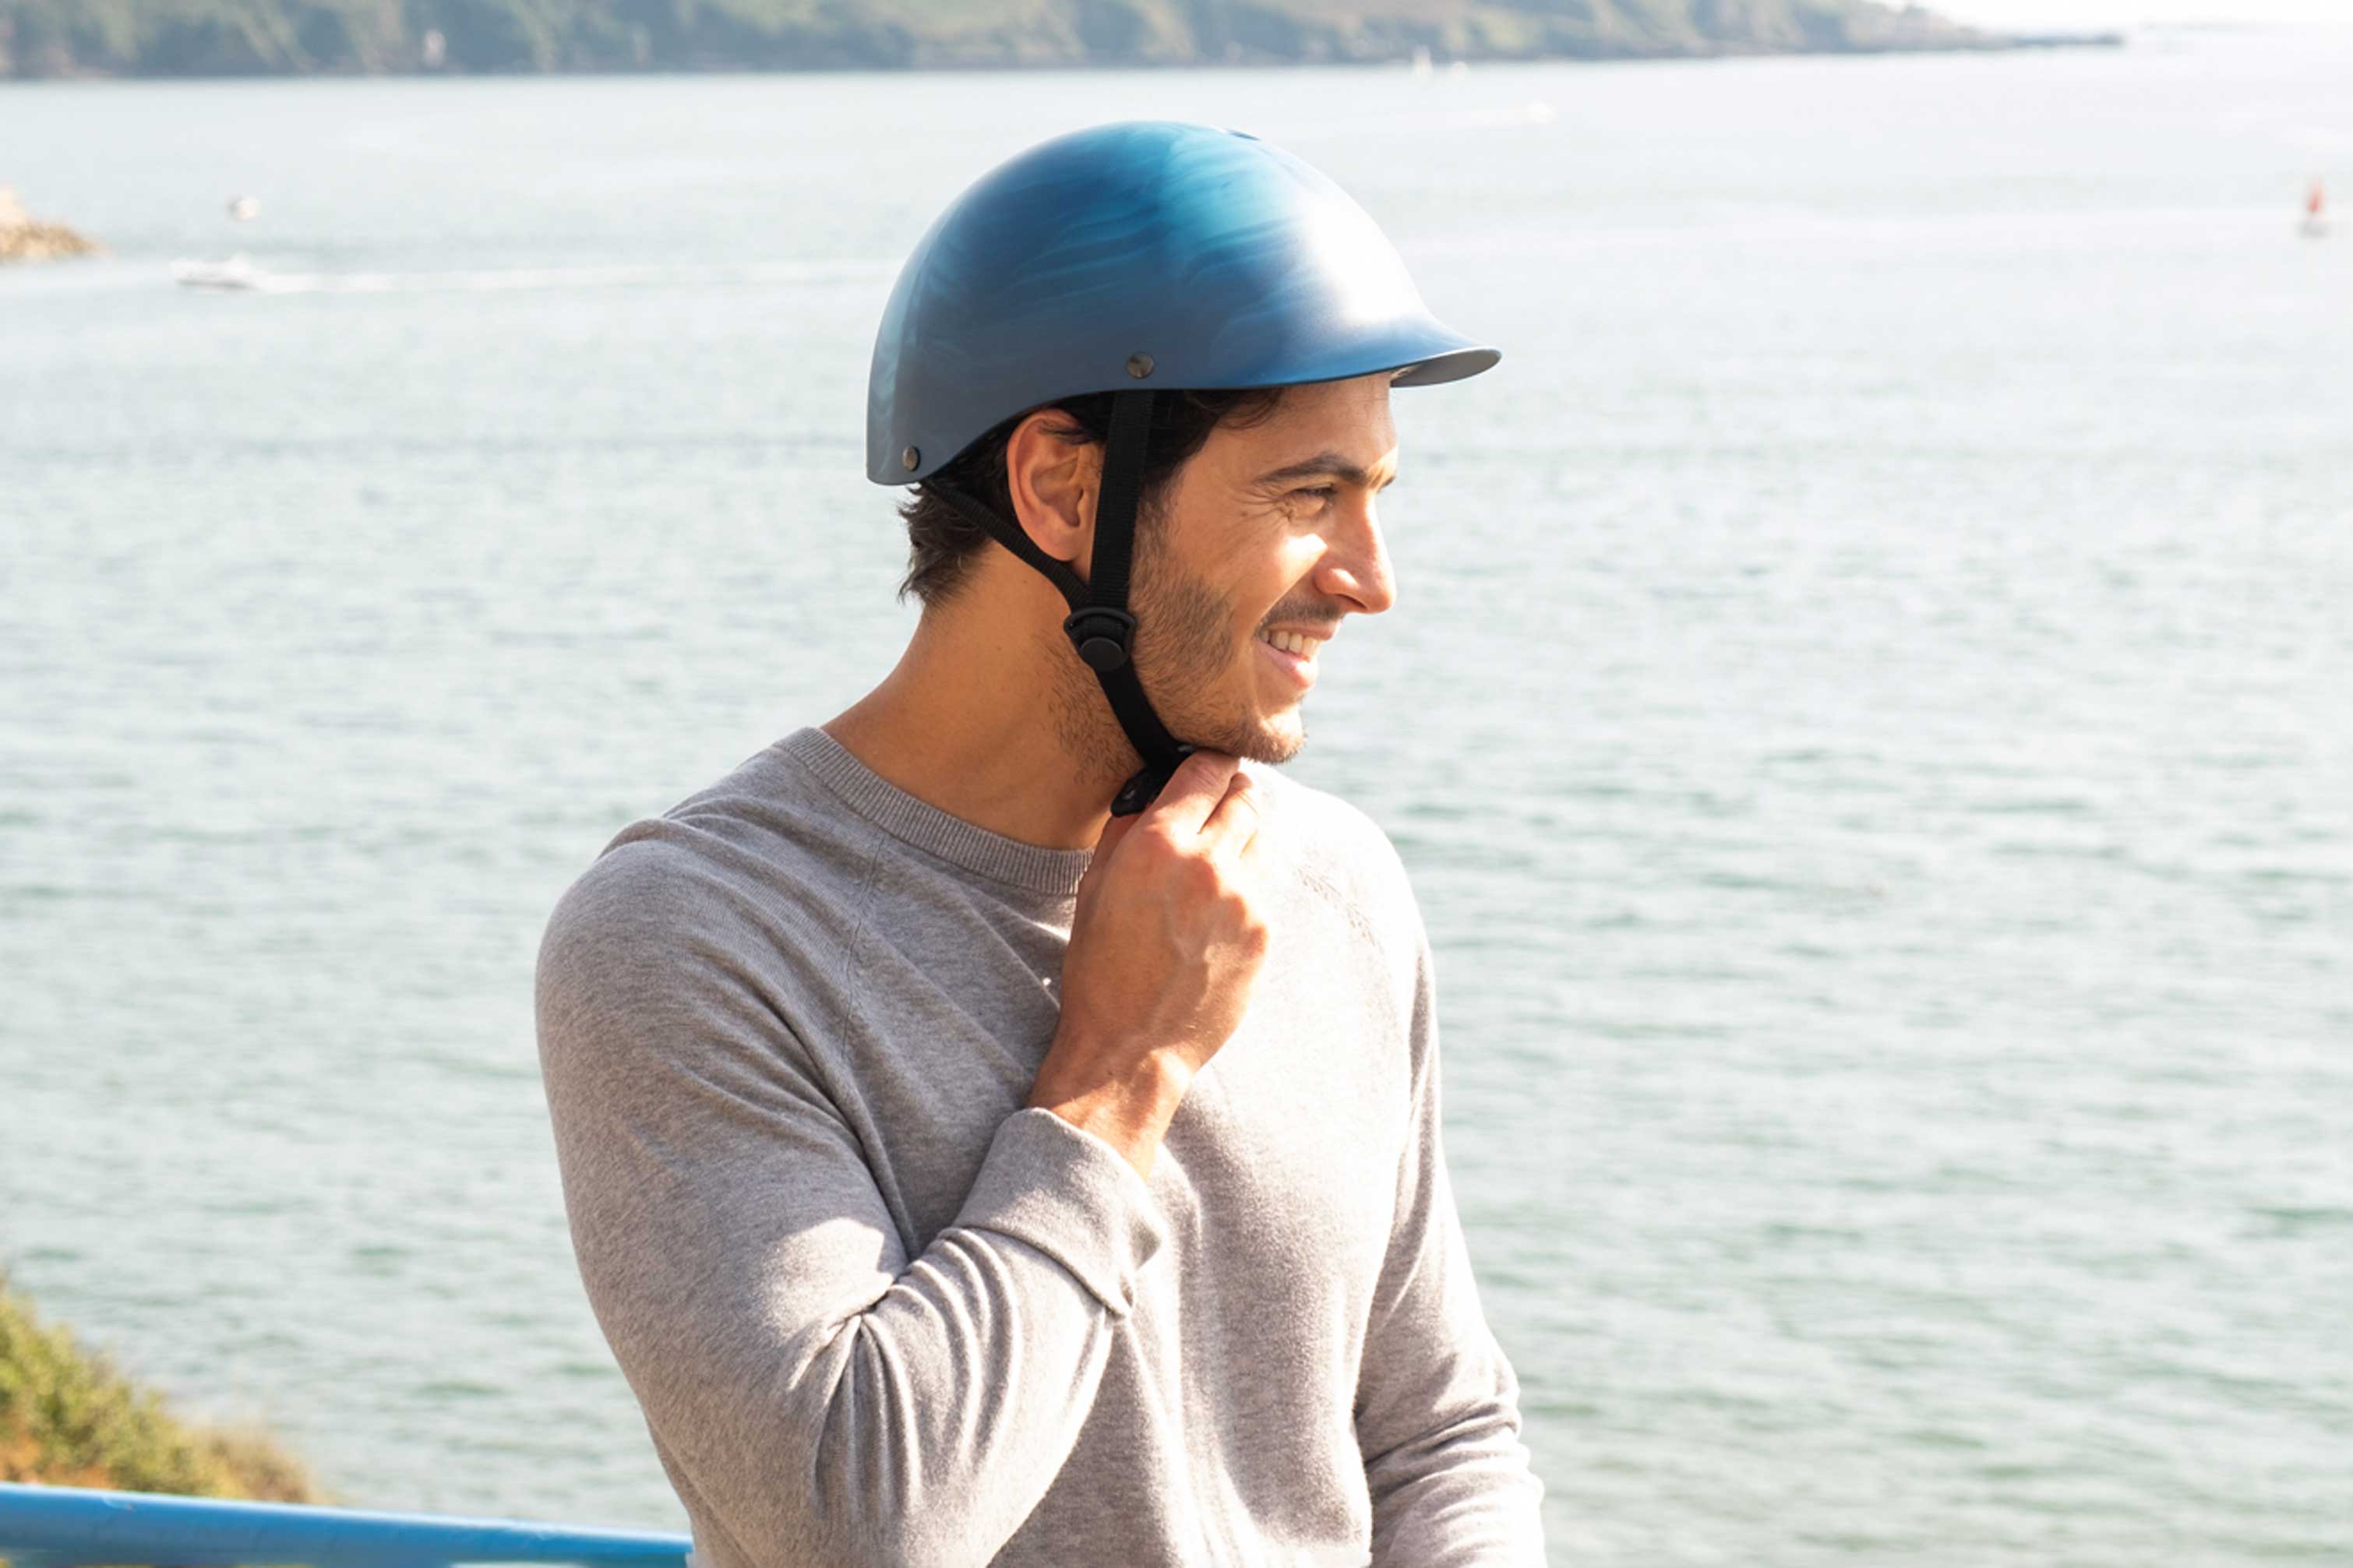 Dashel Ocean Edition Cycle Helmet